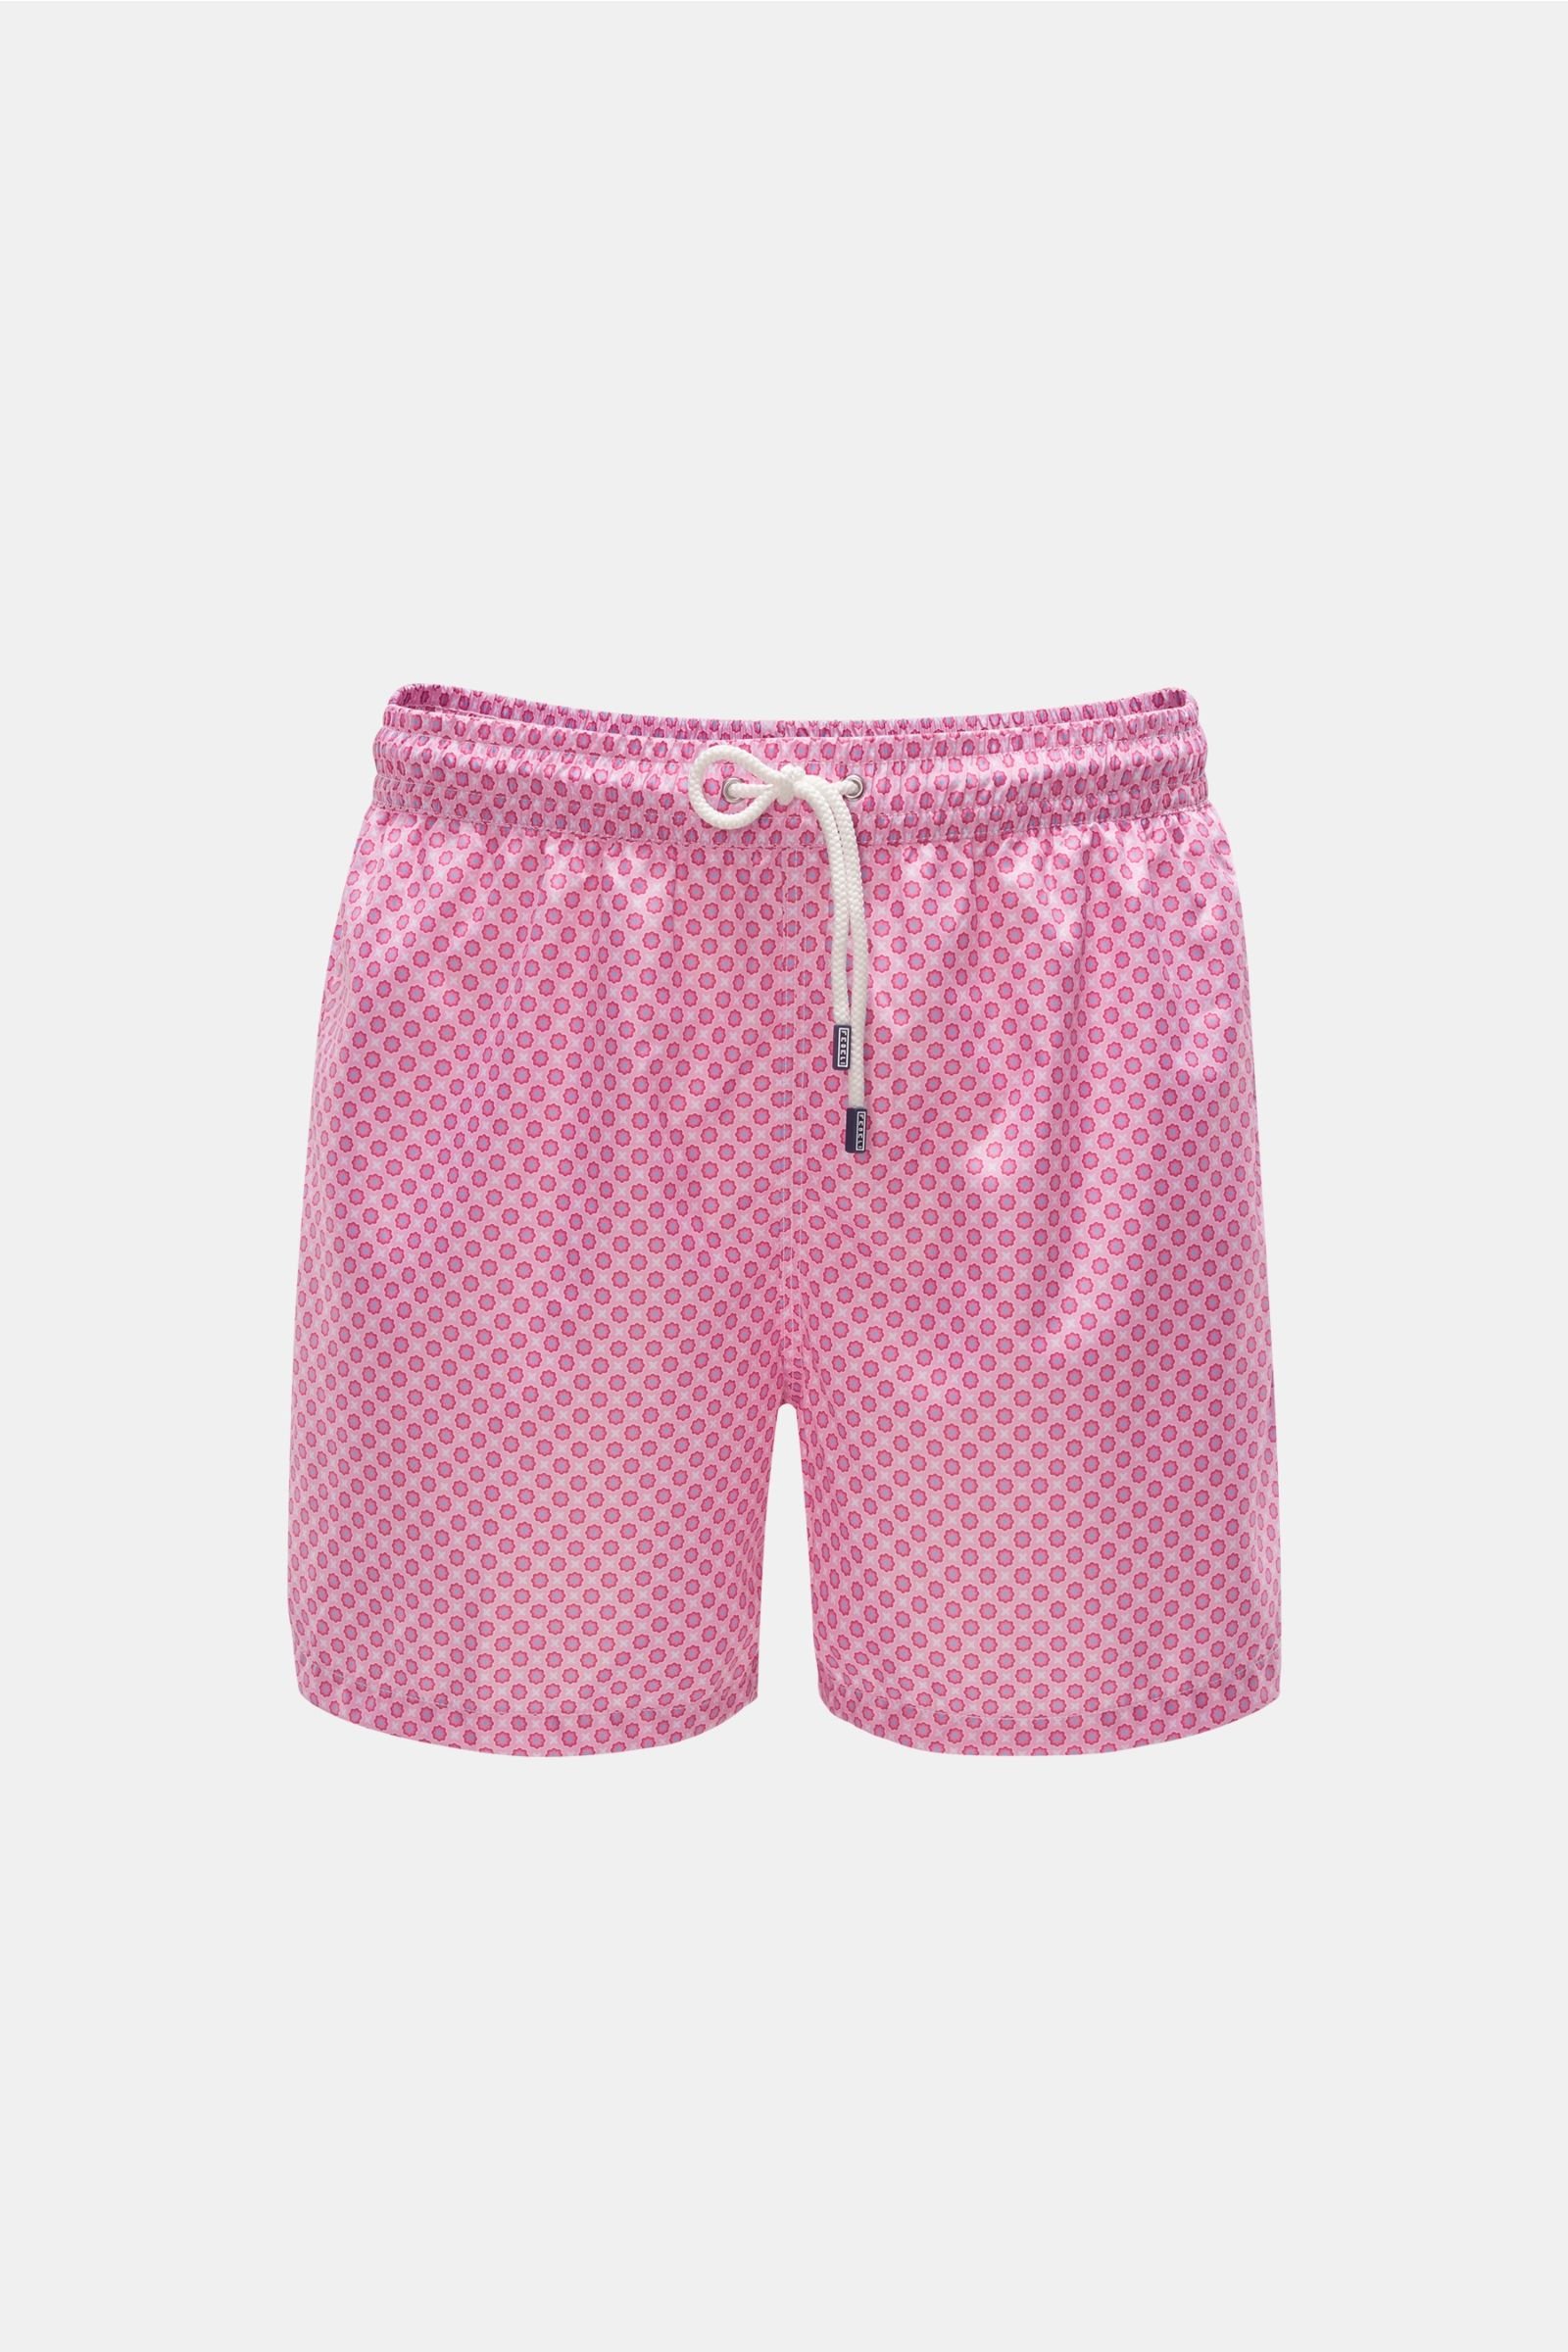 Swim shorts 'Madeira Airstop' rose/pink patterned